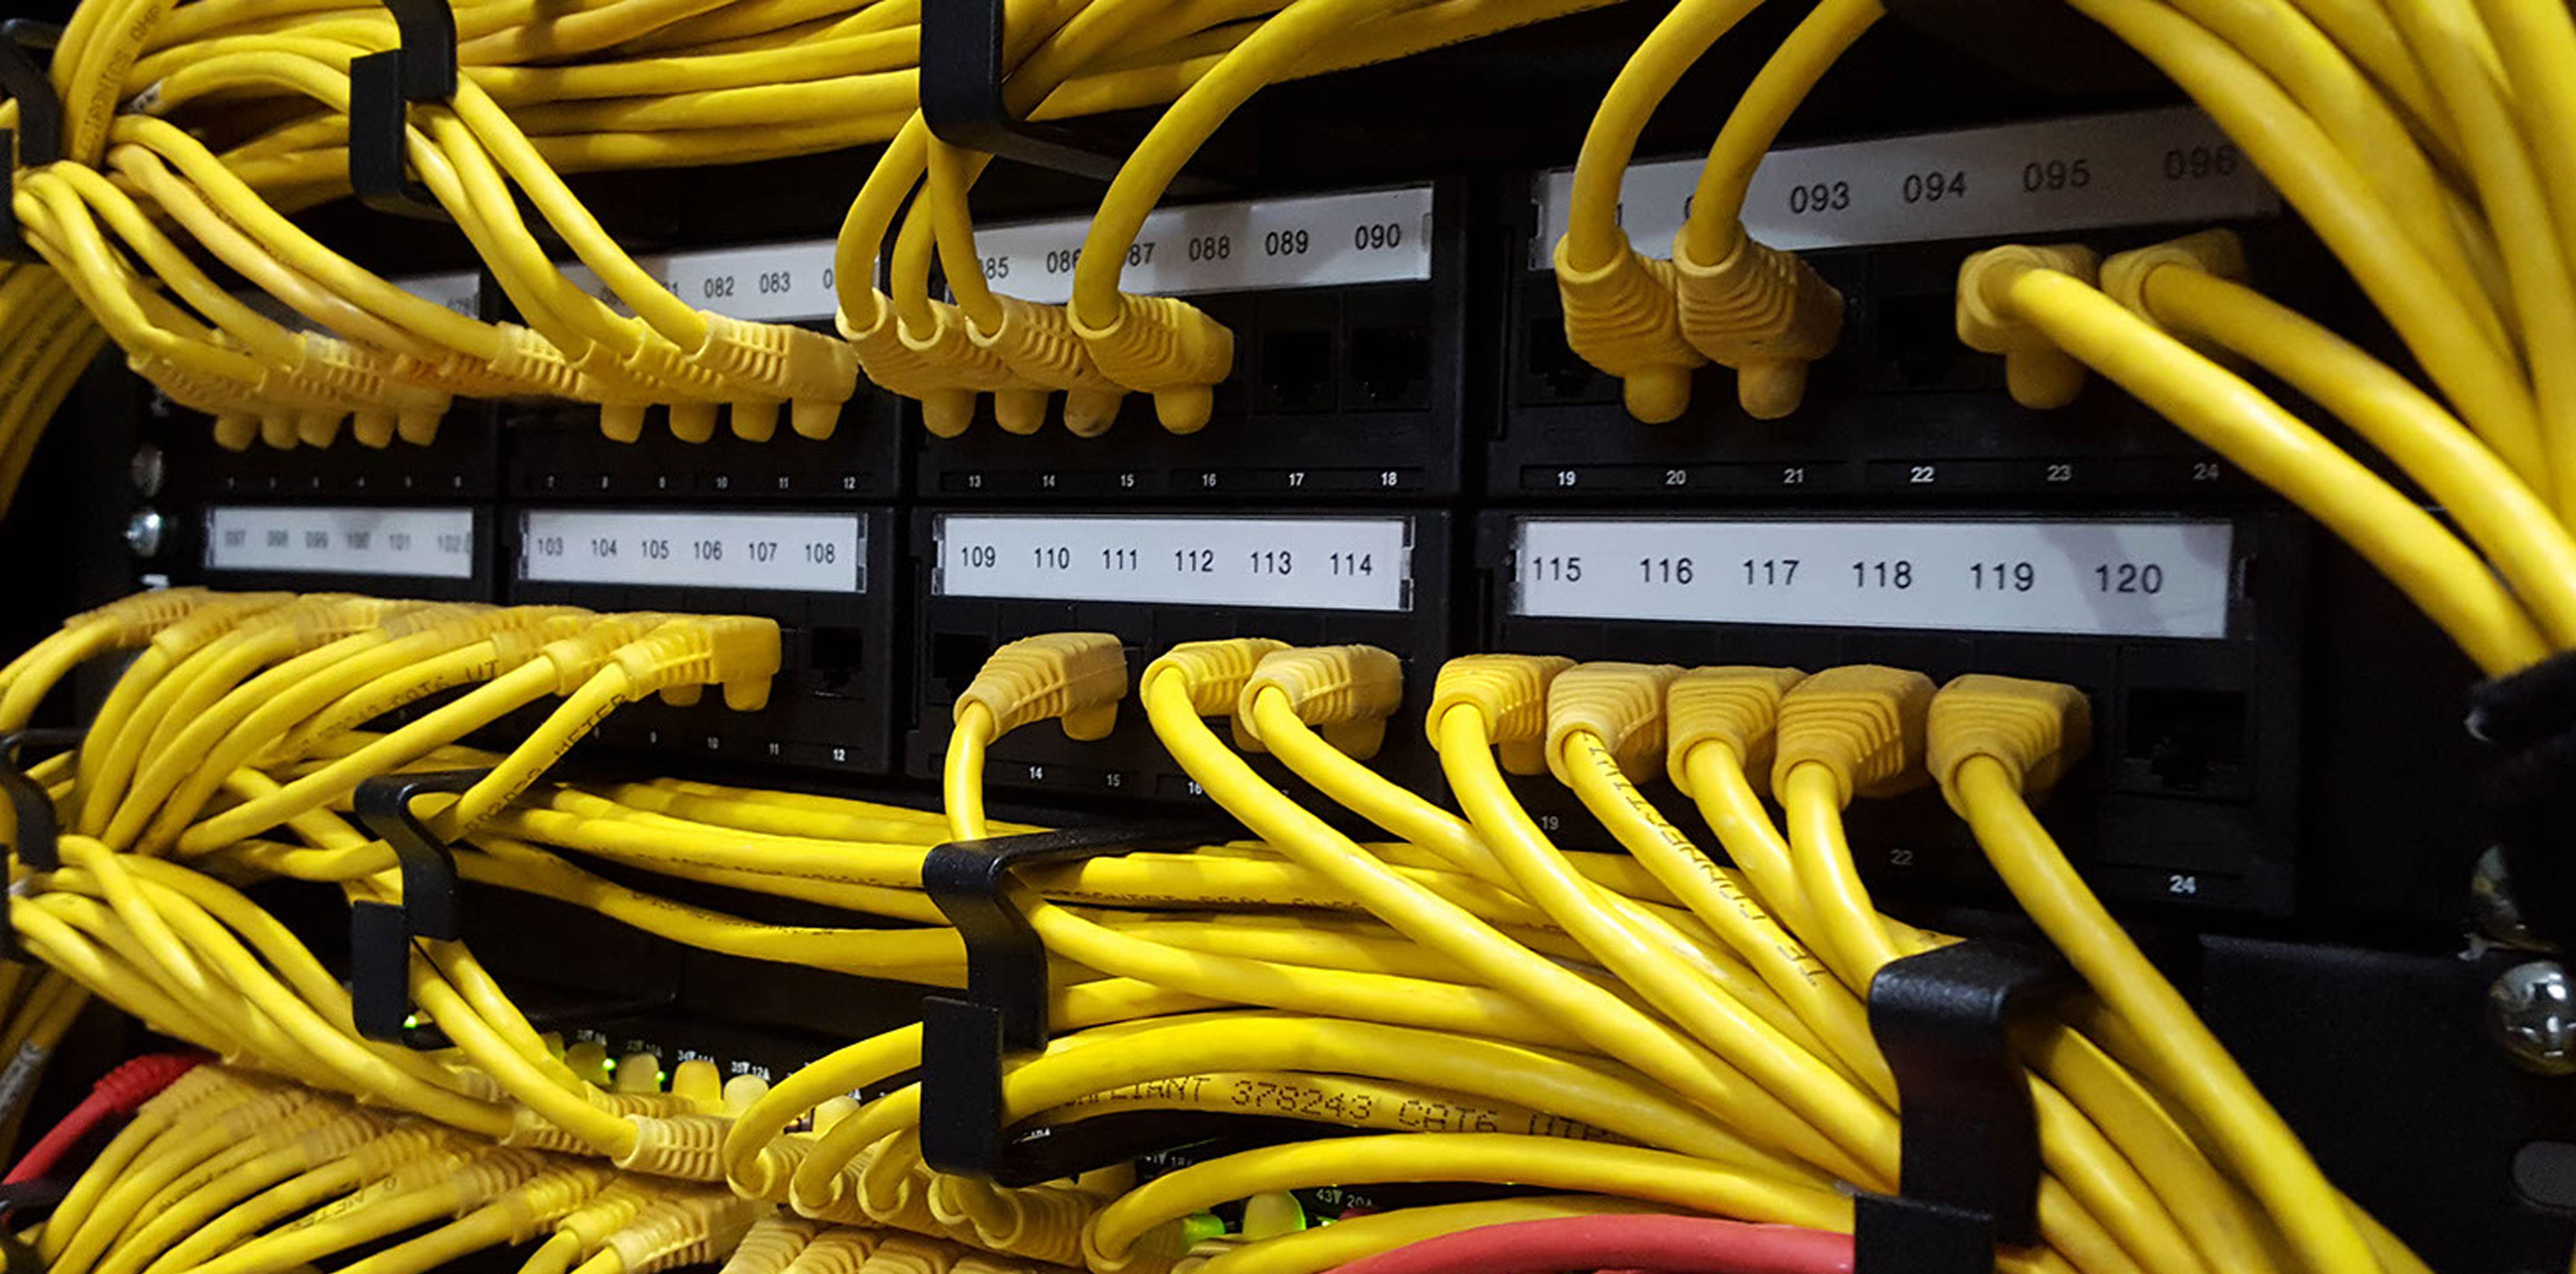 Data, Fibre Optic cabling and server racks